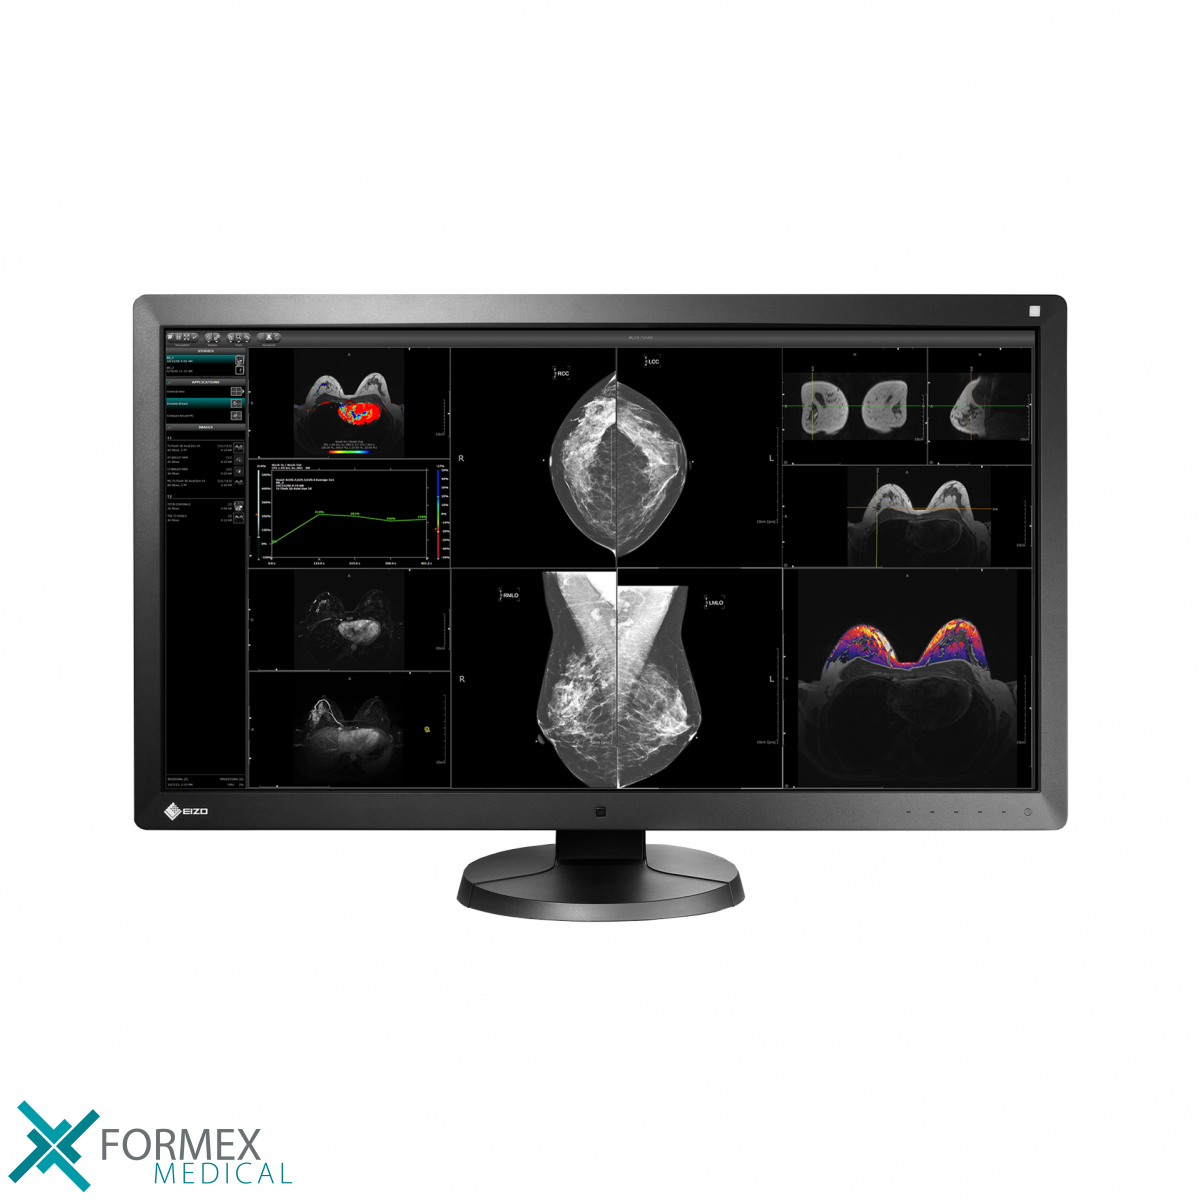 Eizo RadiForce RX850, medical displays, medische schermen, eizo medical monitor, medische monitoren, eizo medical, medische beeldschermen, diagnostische monitoren, diagnostiek monitoren, eizo monitor